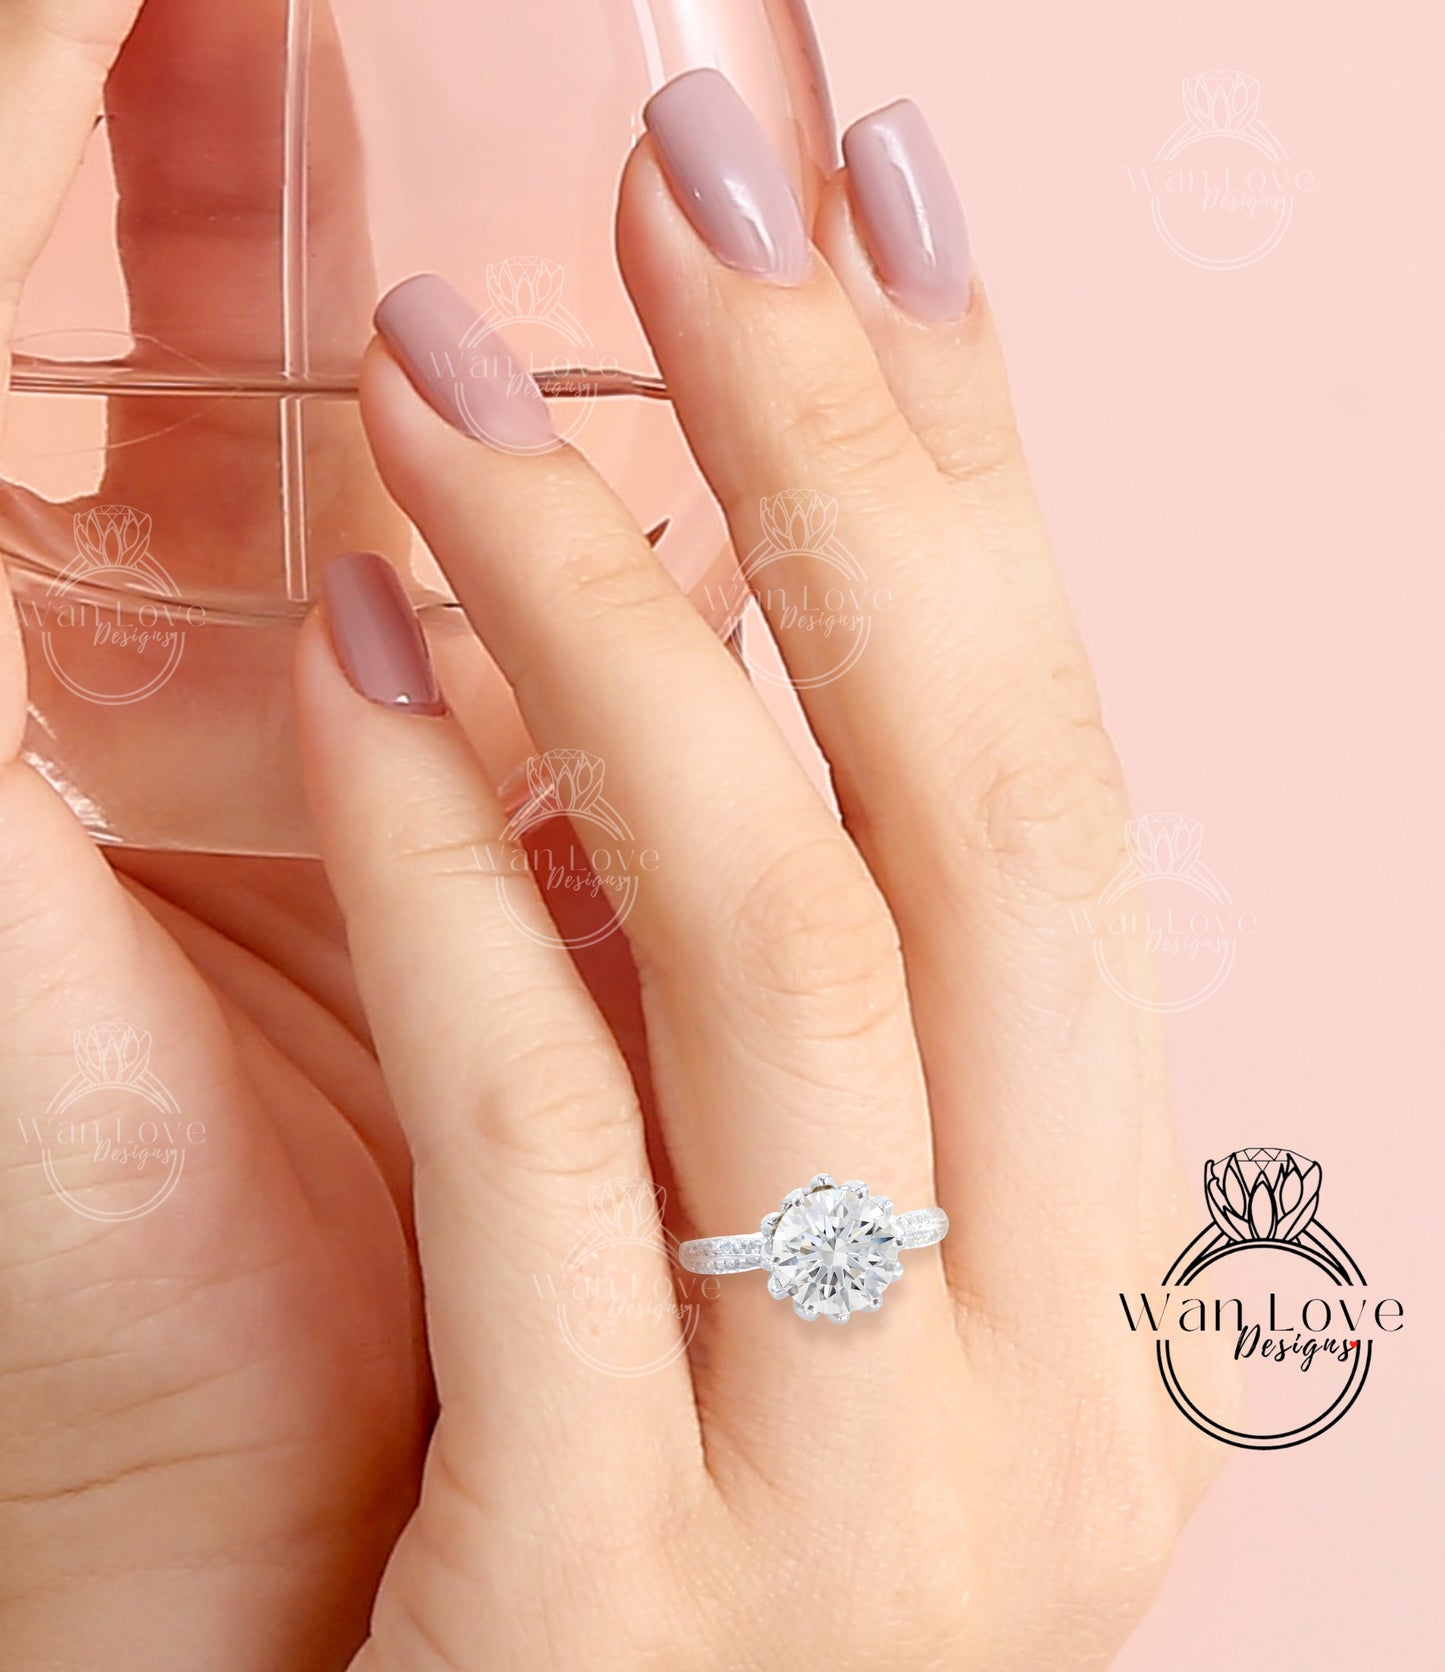 Diamond Lotus Flower Ring, Round Diamond Ring White Gold, Certified Lab Diamond Ring Band,Unique Diamond Ring 14k White Gold Engagement Ring